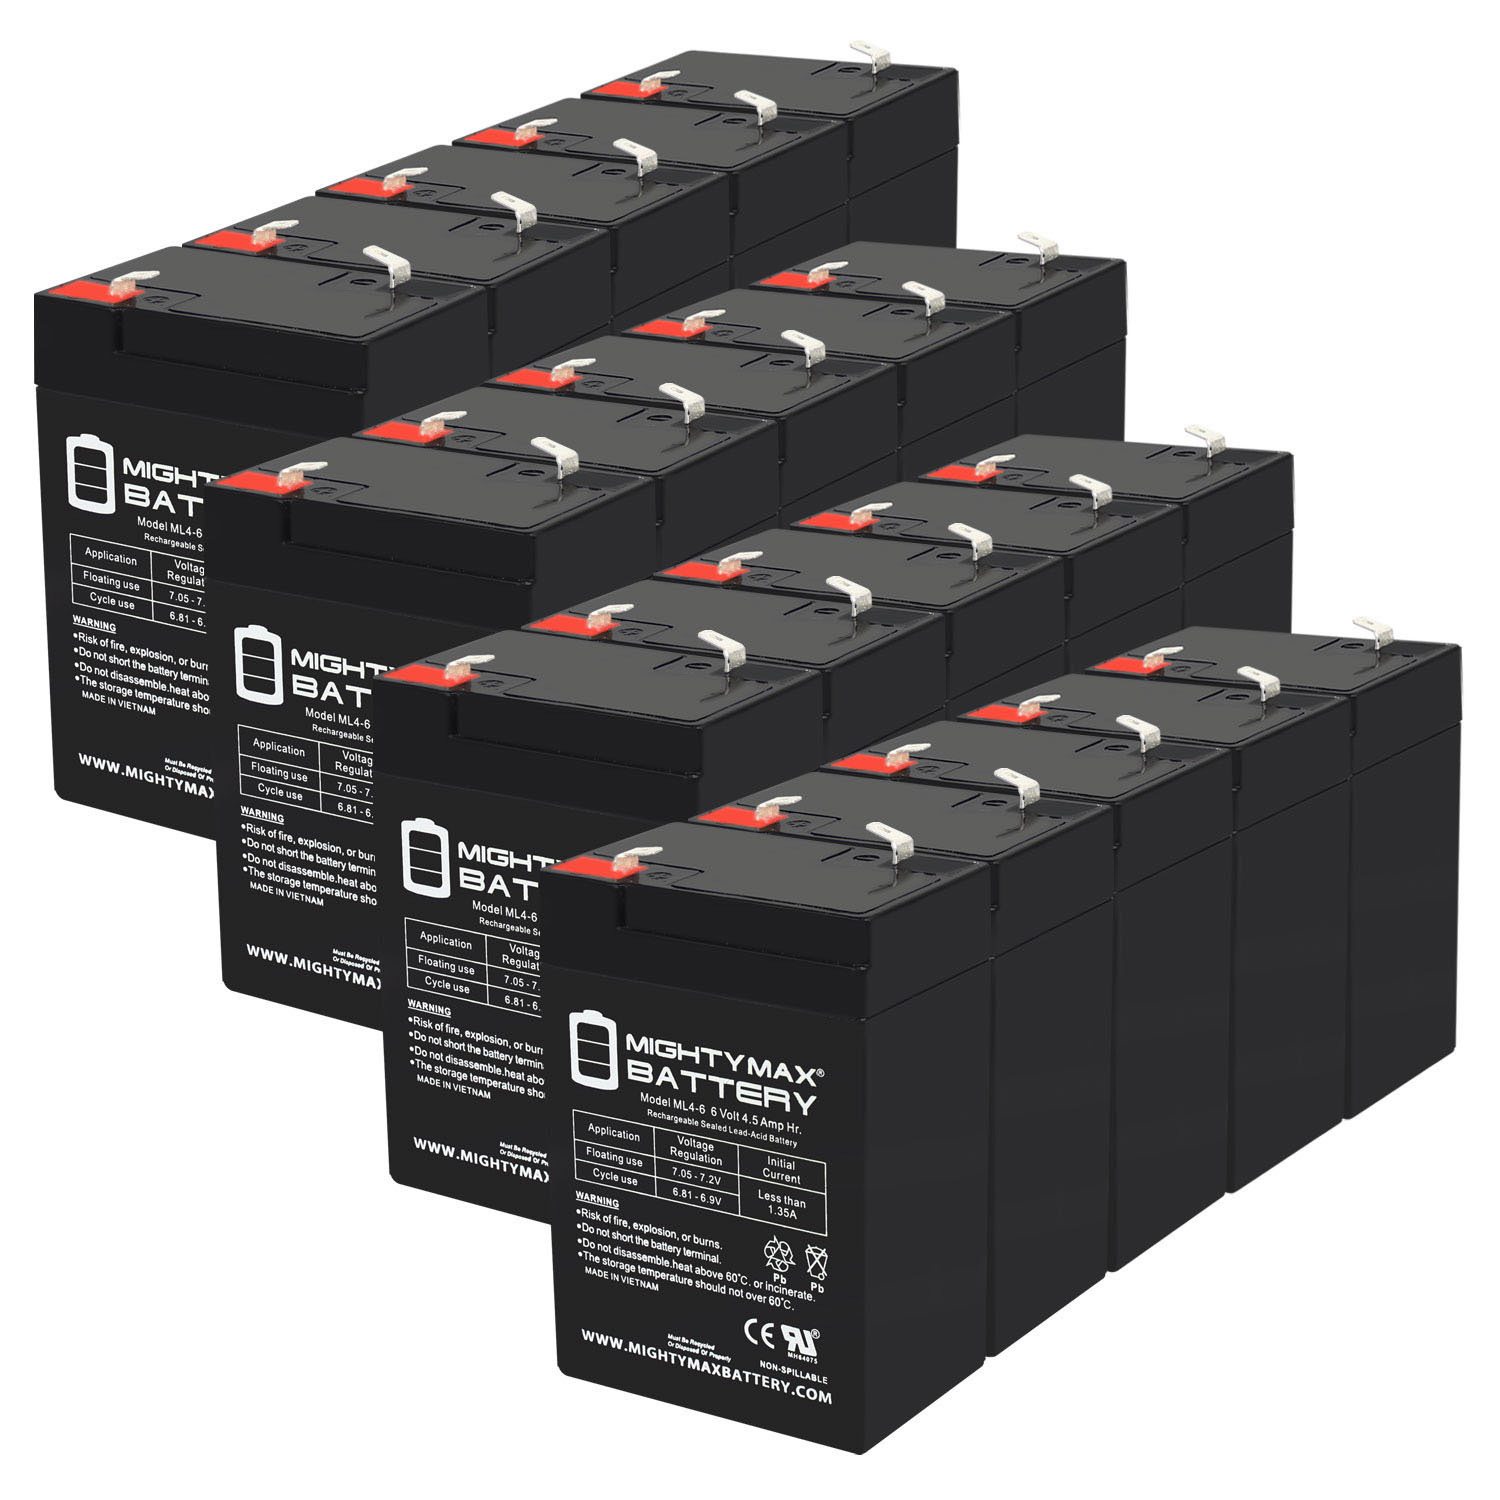 6V 4.5AH SLA Replacement Battery for Emergi-Lite PSM9 - 20 Pack